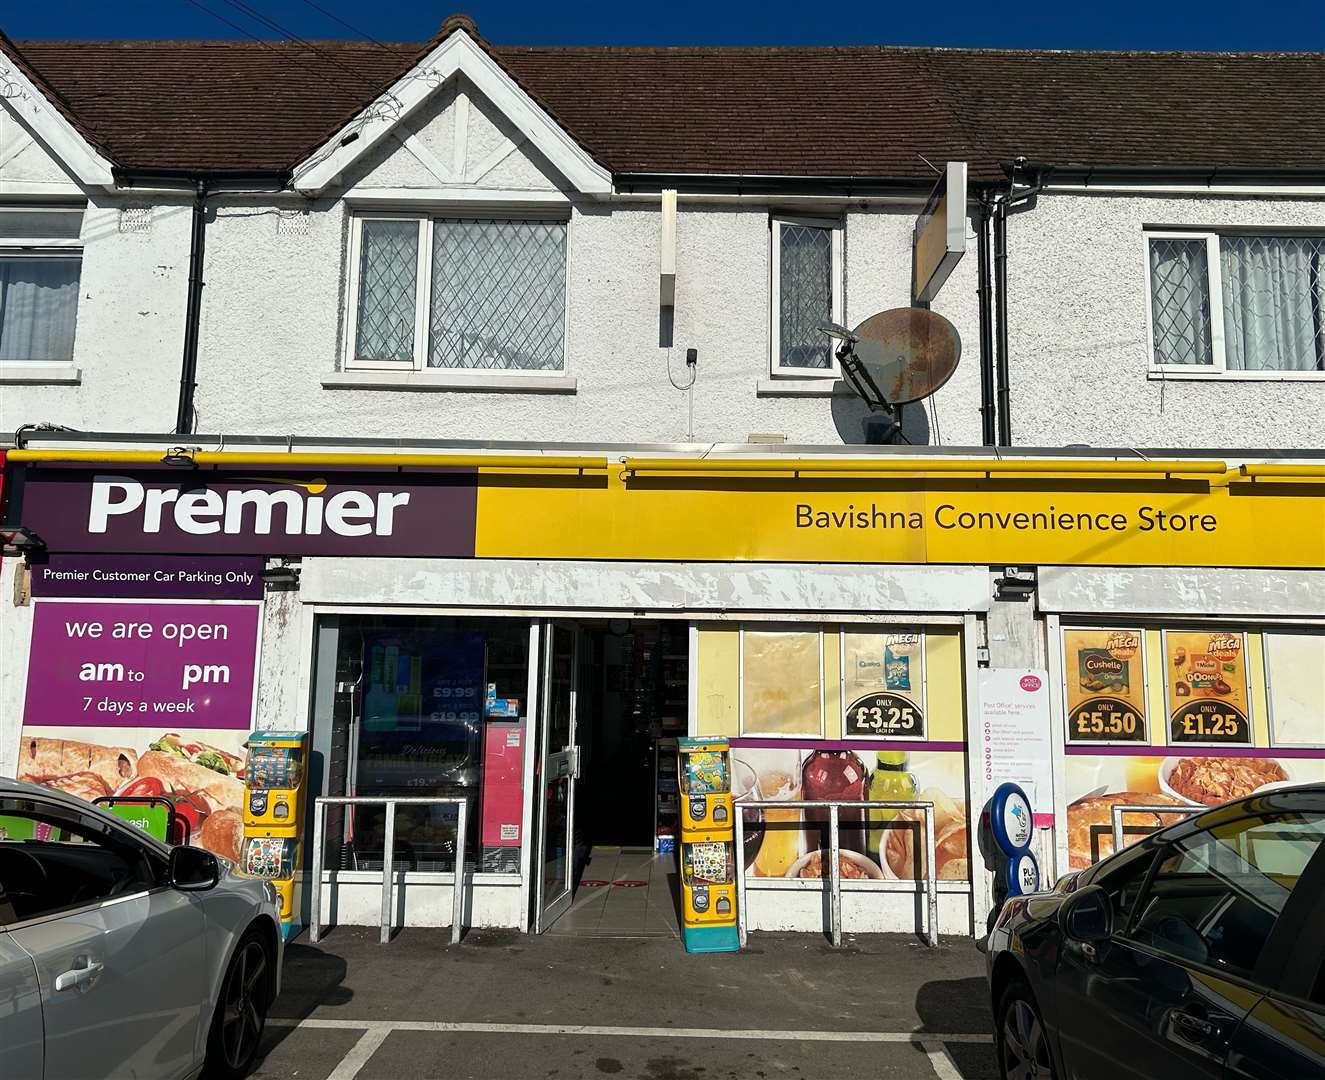 Premier Bavishna convenience store in Ashford